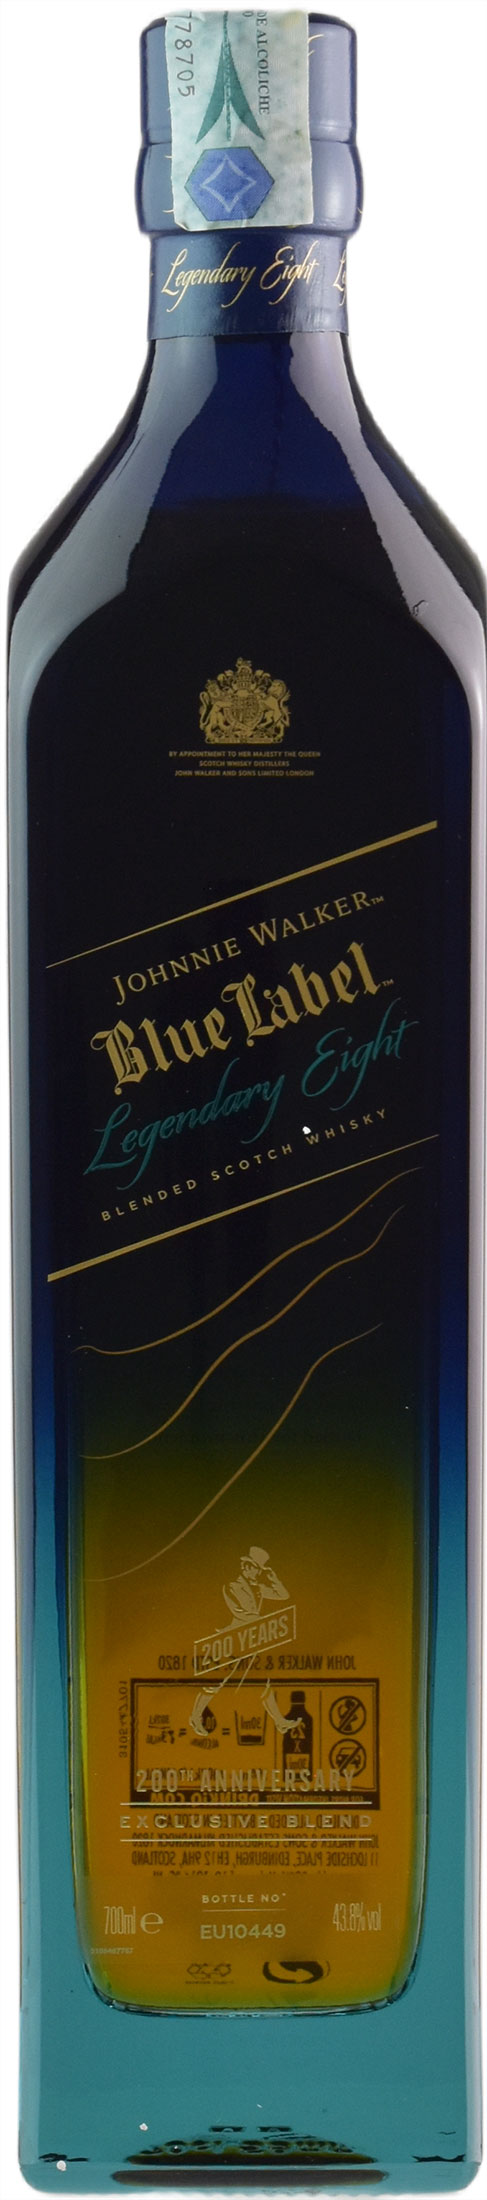 Johnnie Walker Blended Scotch Whisky Legendary Eight 200th Anniversary